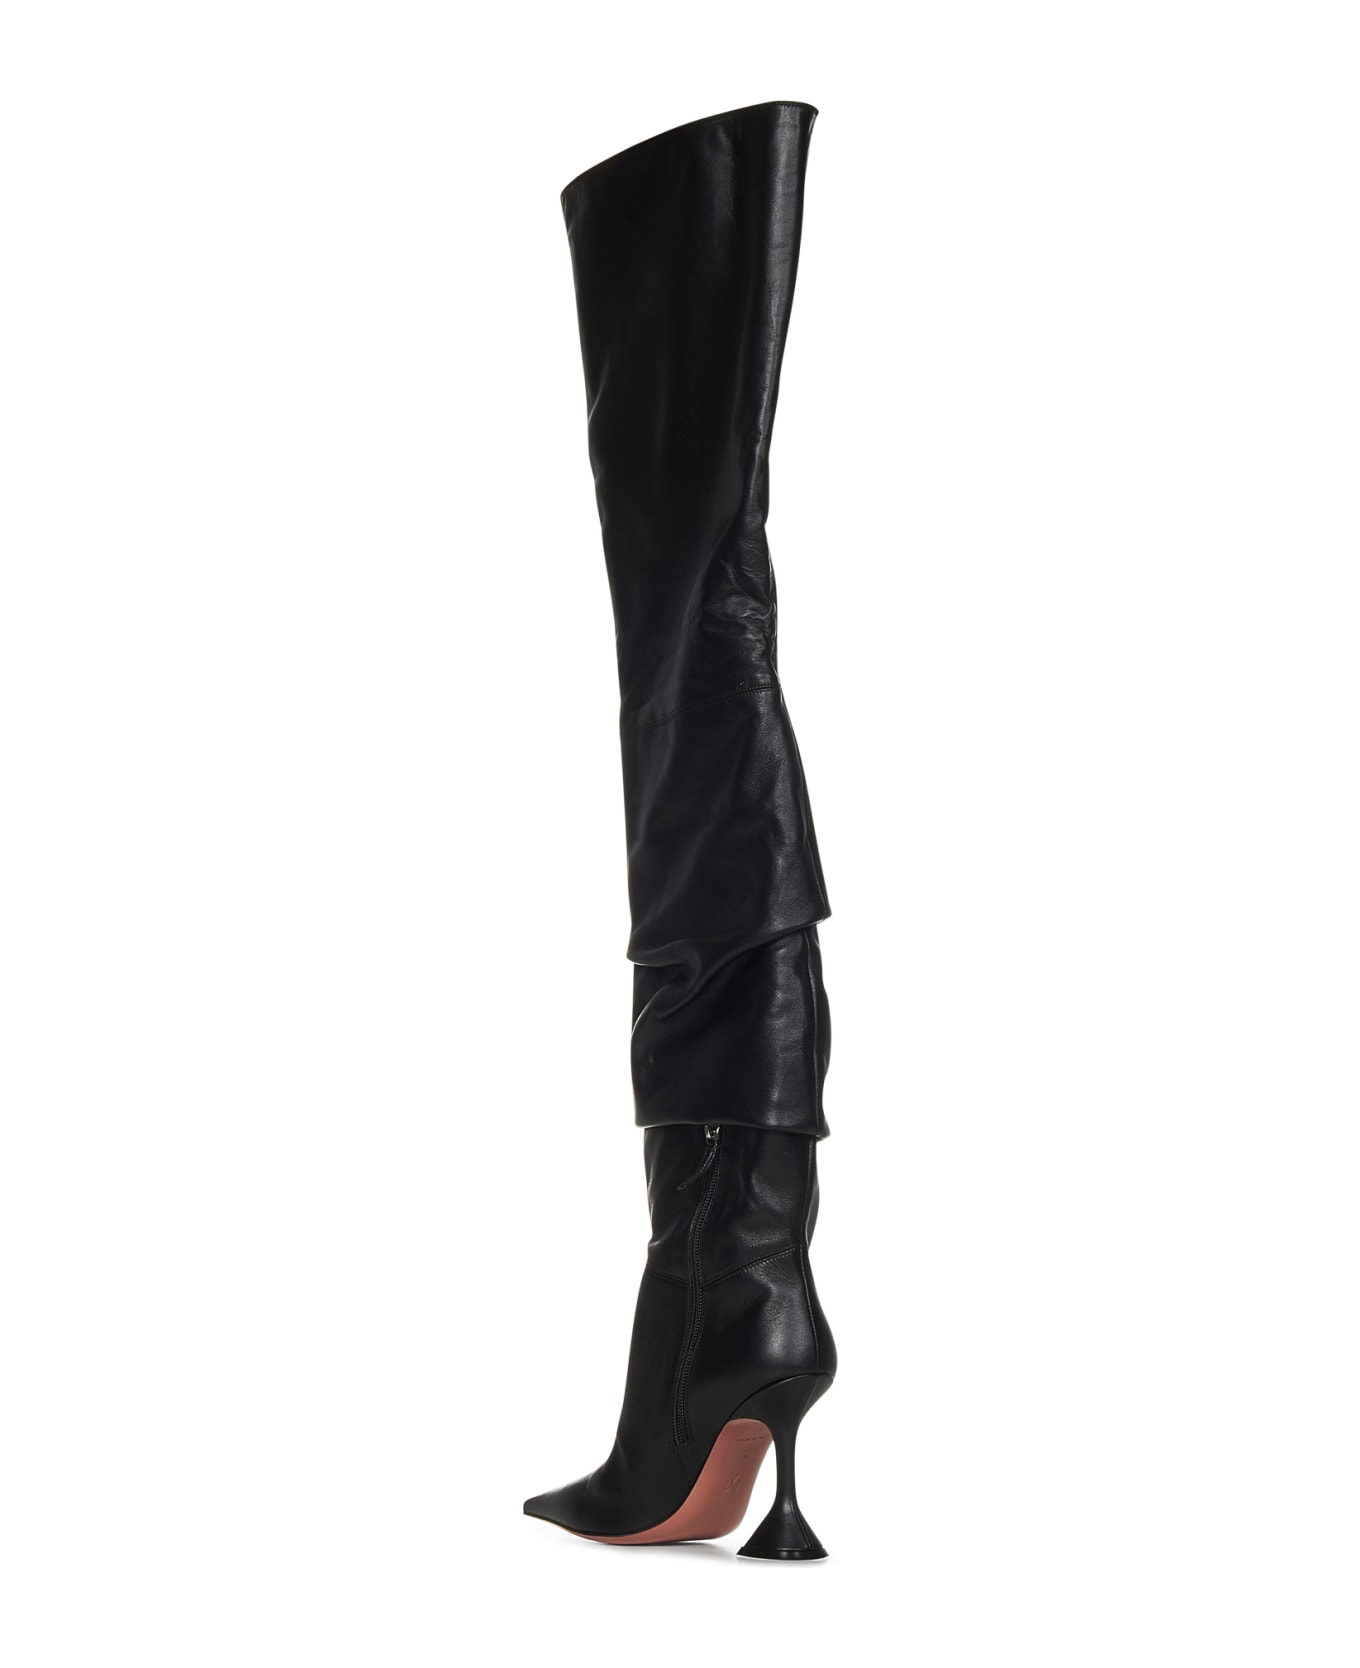 Amina Muaddi Olivia Thigh High Boots - Black